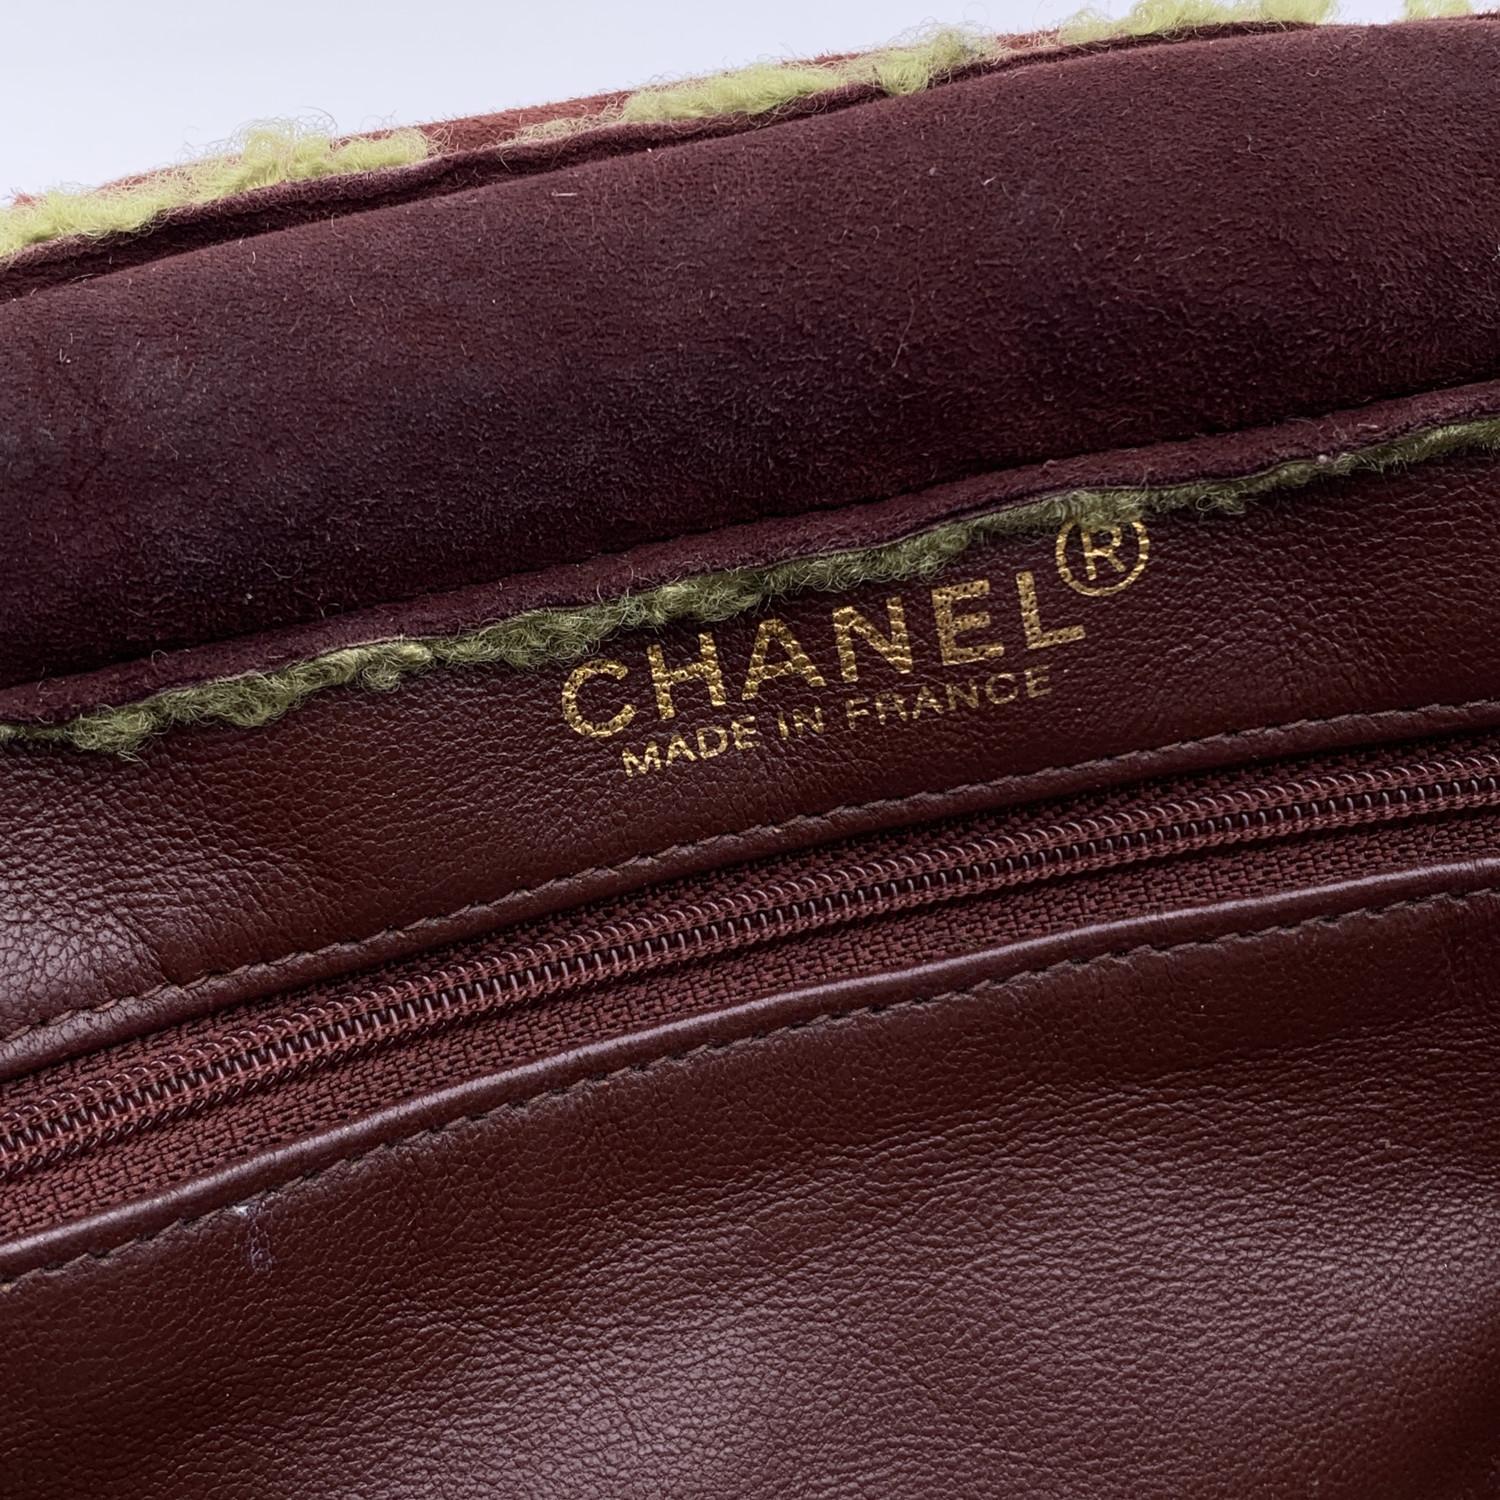 Black Chanel Vintage Brown and Green Suede Shearling Tote Bag Handbag